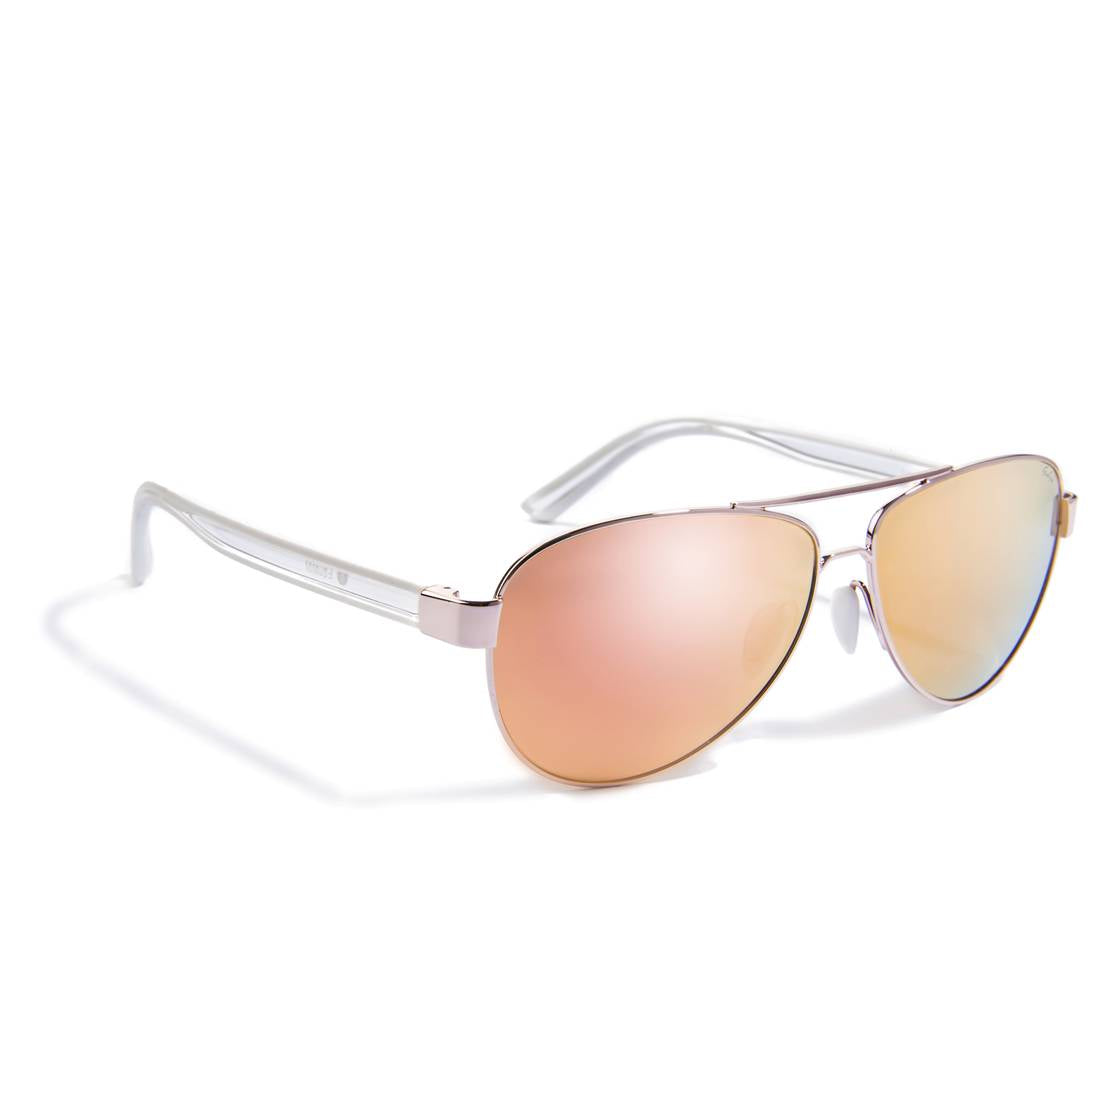 Gidgee Eyewear - Equator Rose Sunglasses